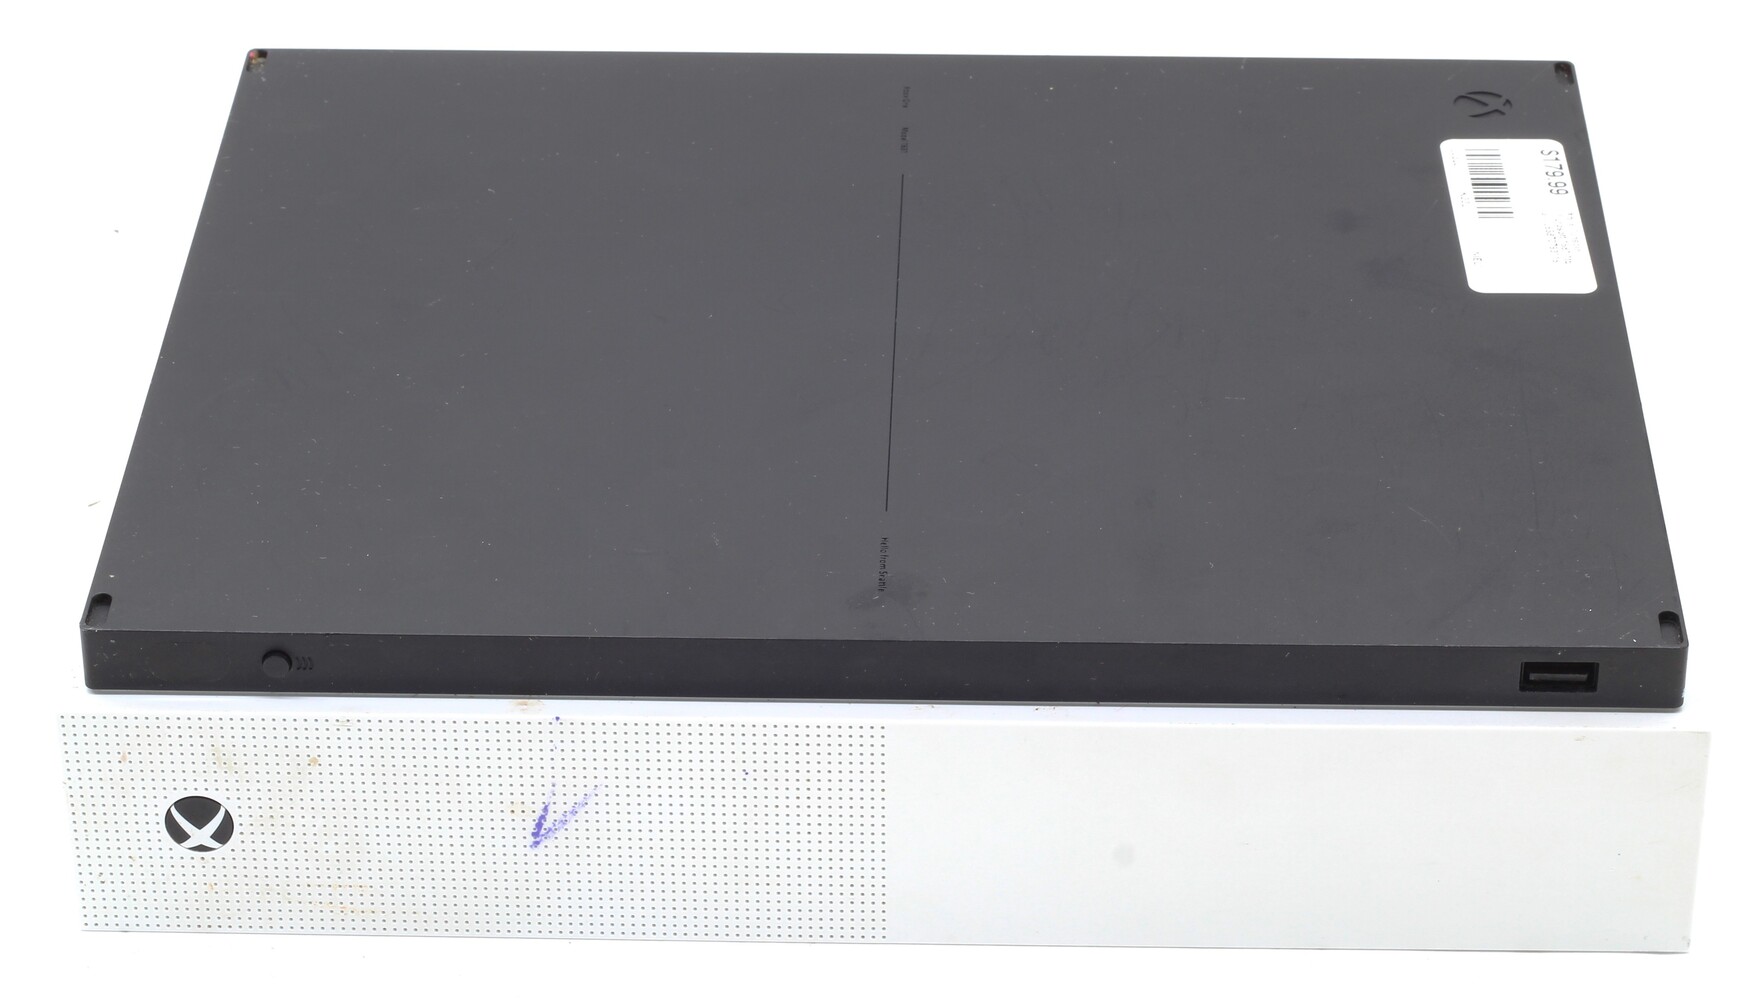 Microsoft XBOX One S 1TB Model 1681 Slim w/ Controller Power Cord HDMI